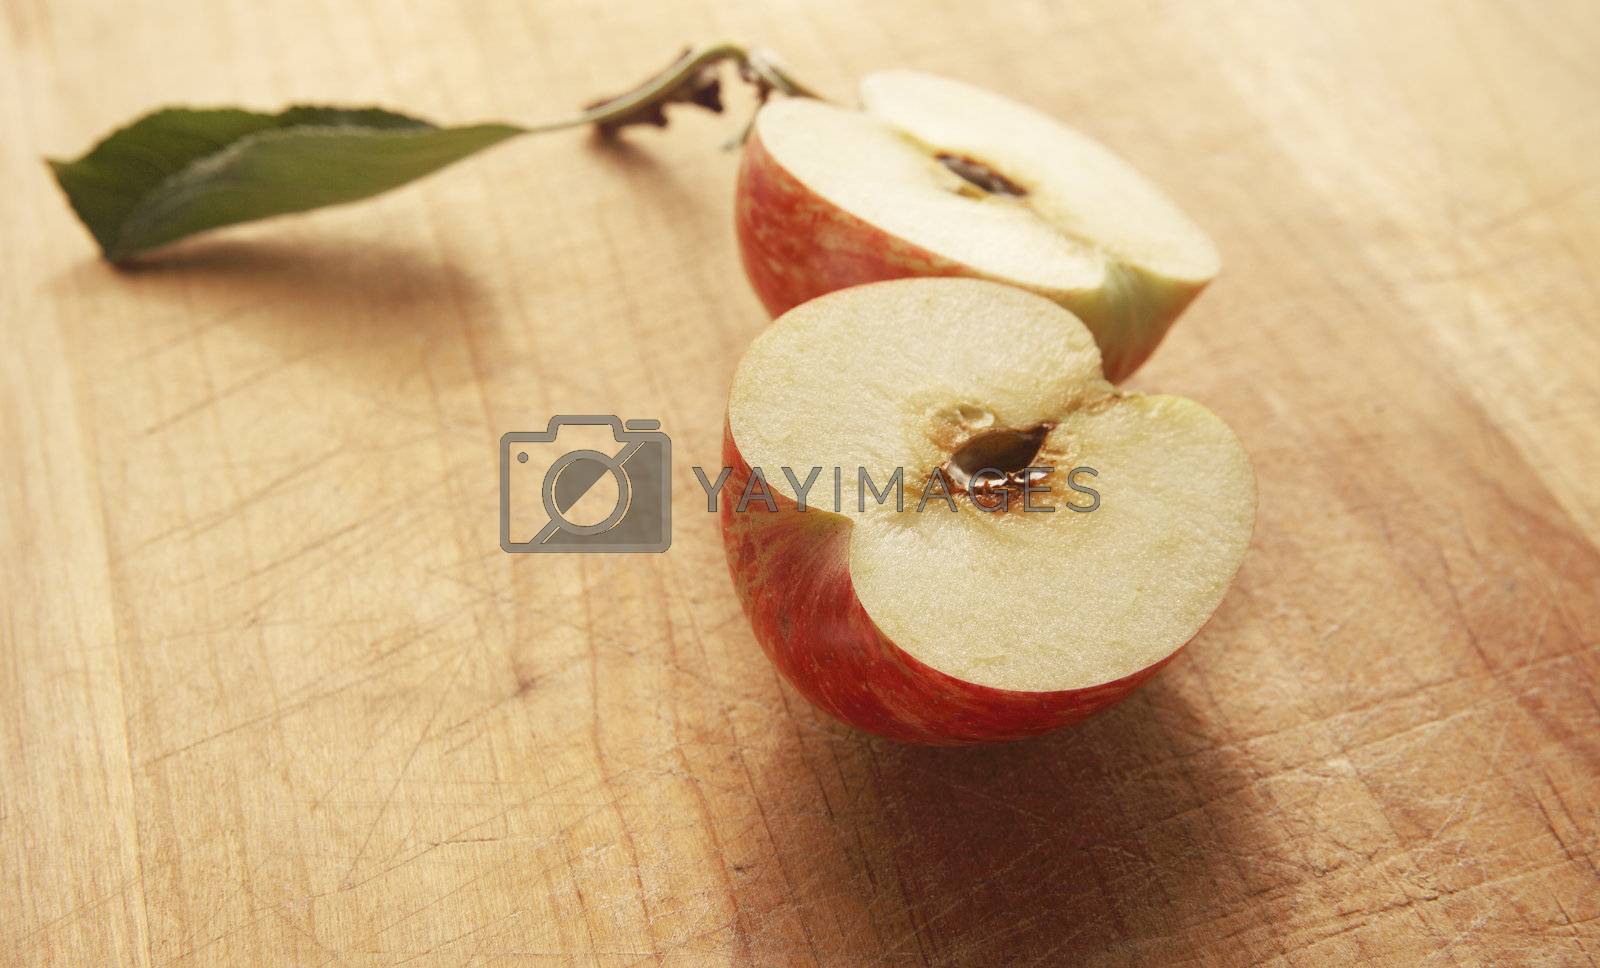 Royalty free image of apple cut in half by nebari